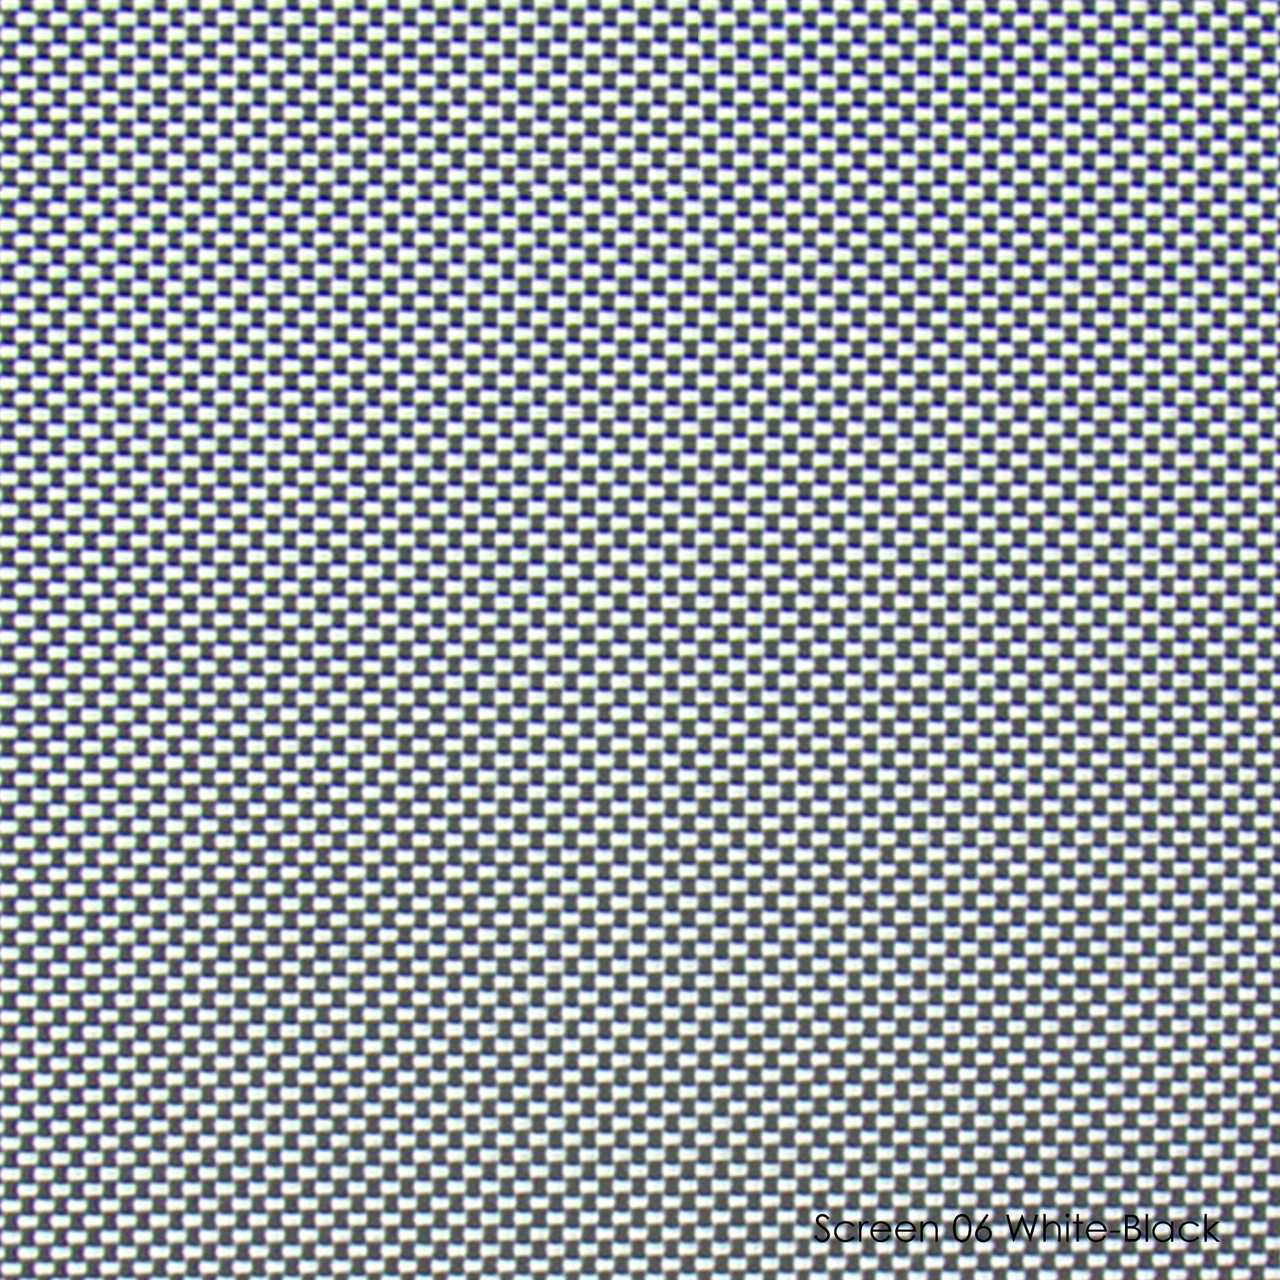 Тканинні ролети Screen-06 white-black